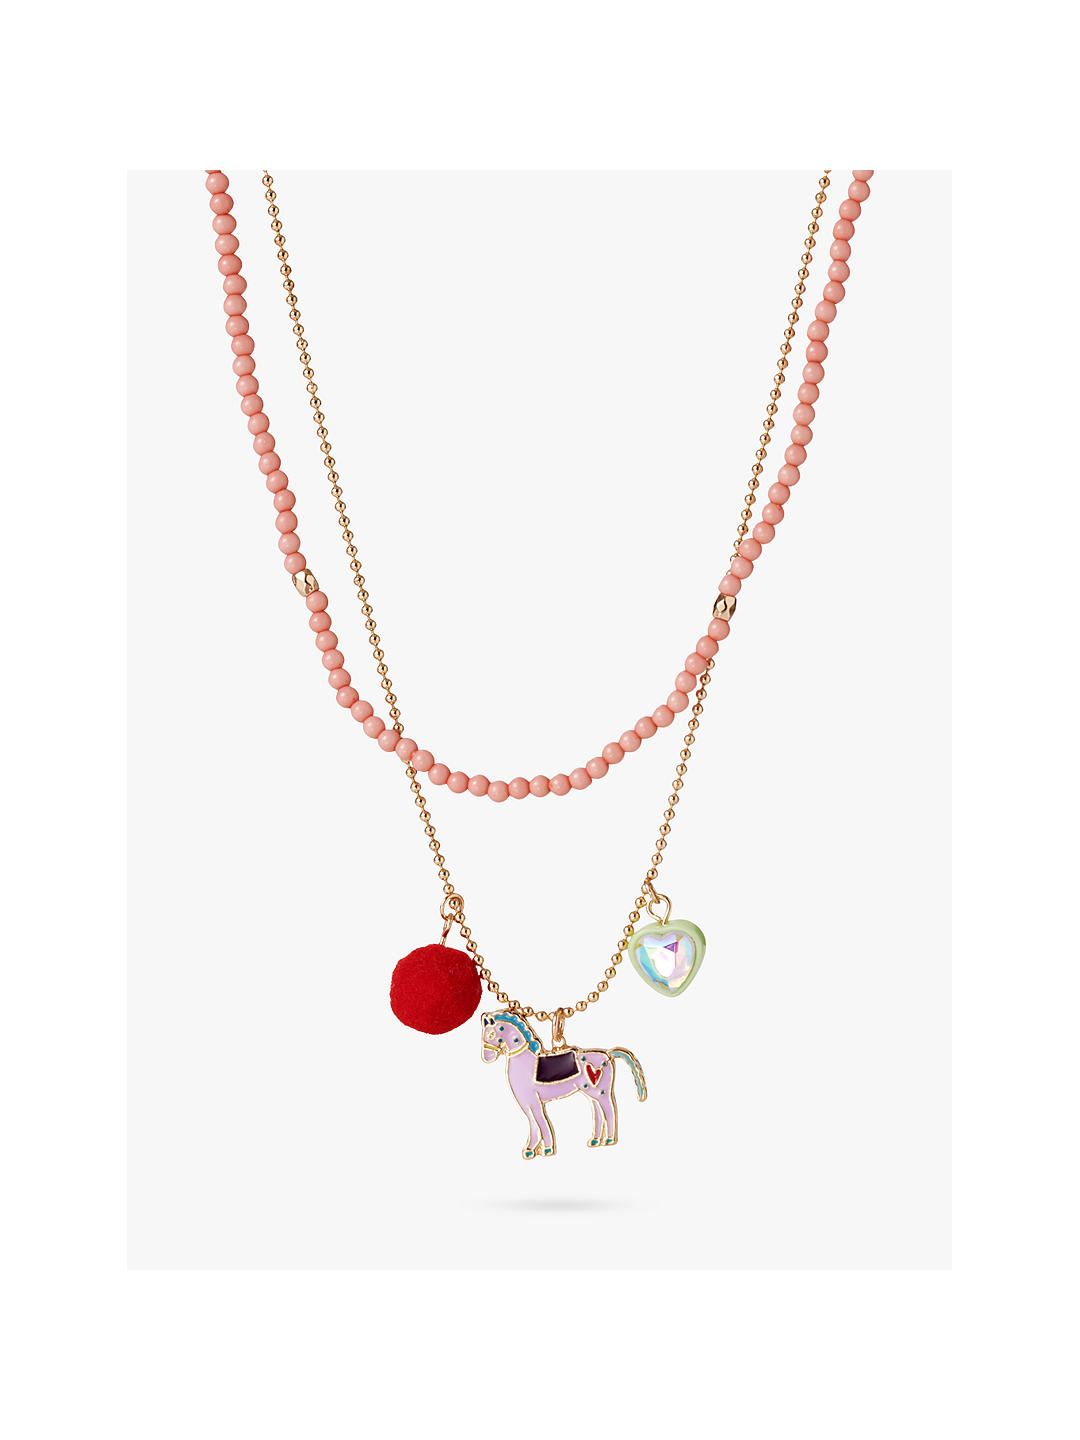 Stych Kids' Unicorn Pom Pom Necklace, Gold/Multi